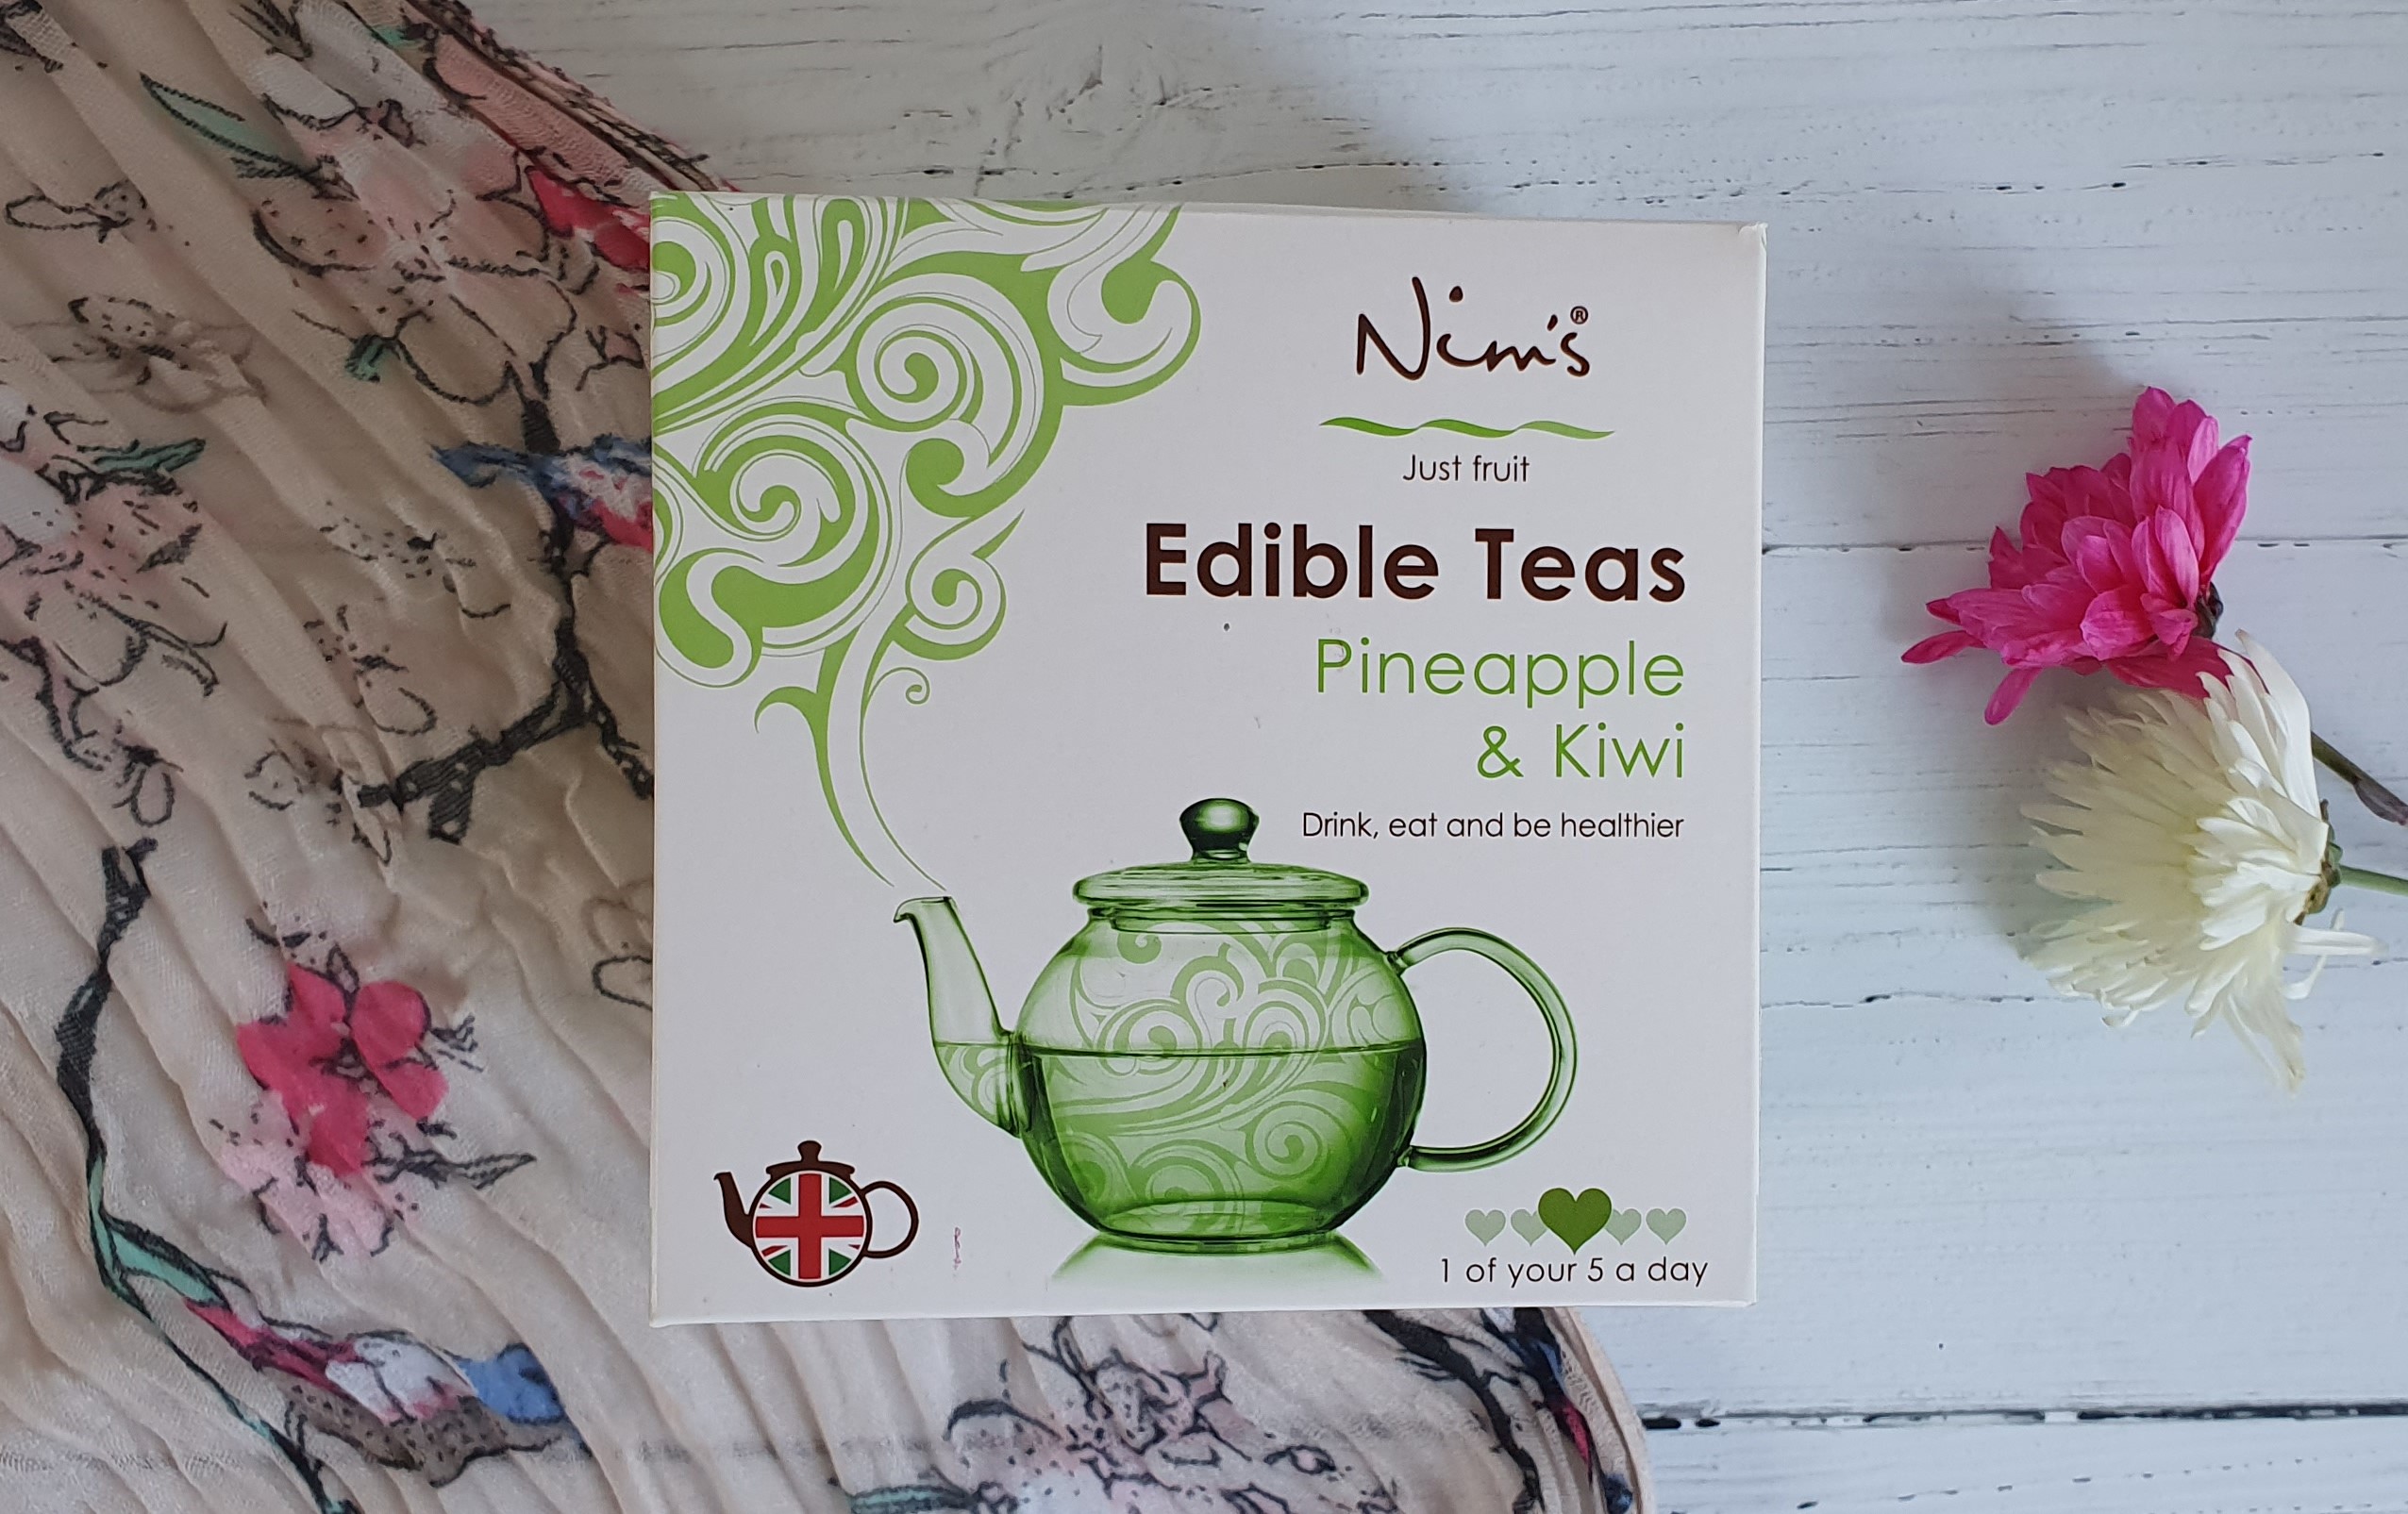 Nim's edible teas